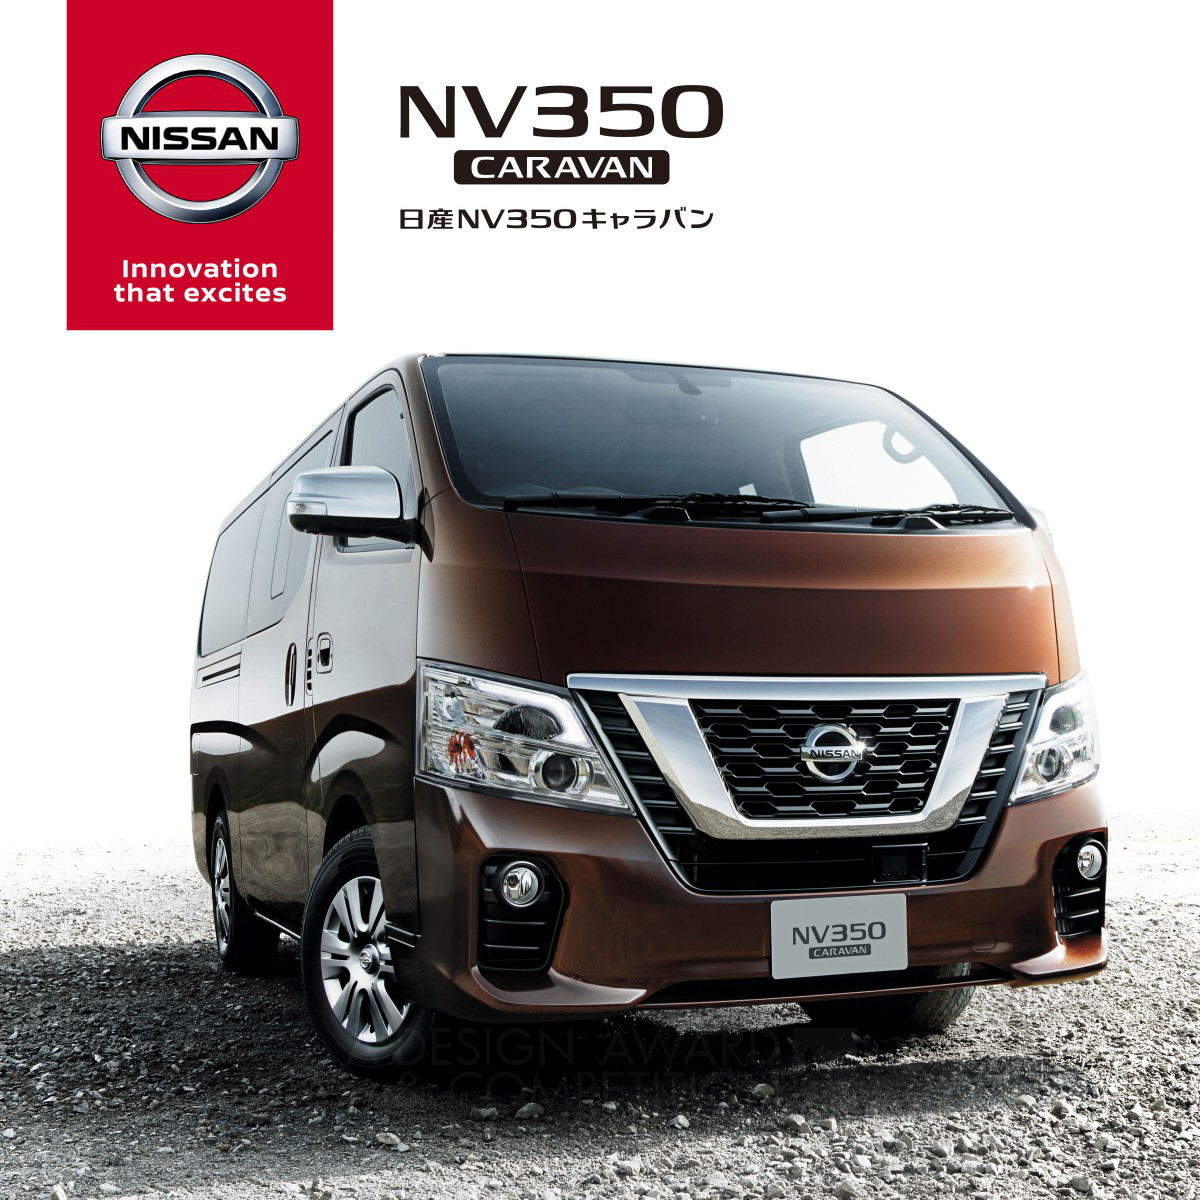 Revolutionizing Commercial Vans: The NISSAN NV350